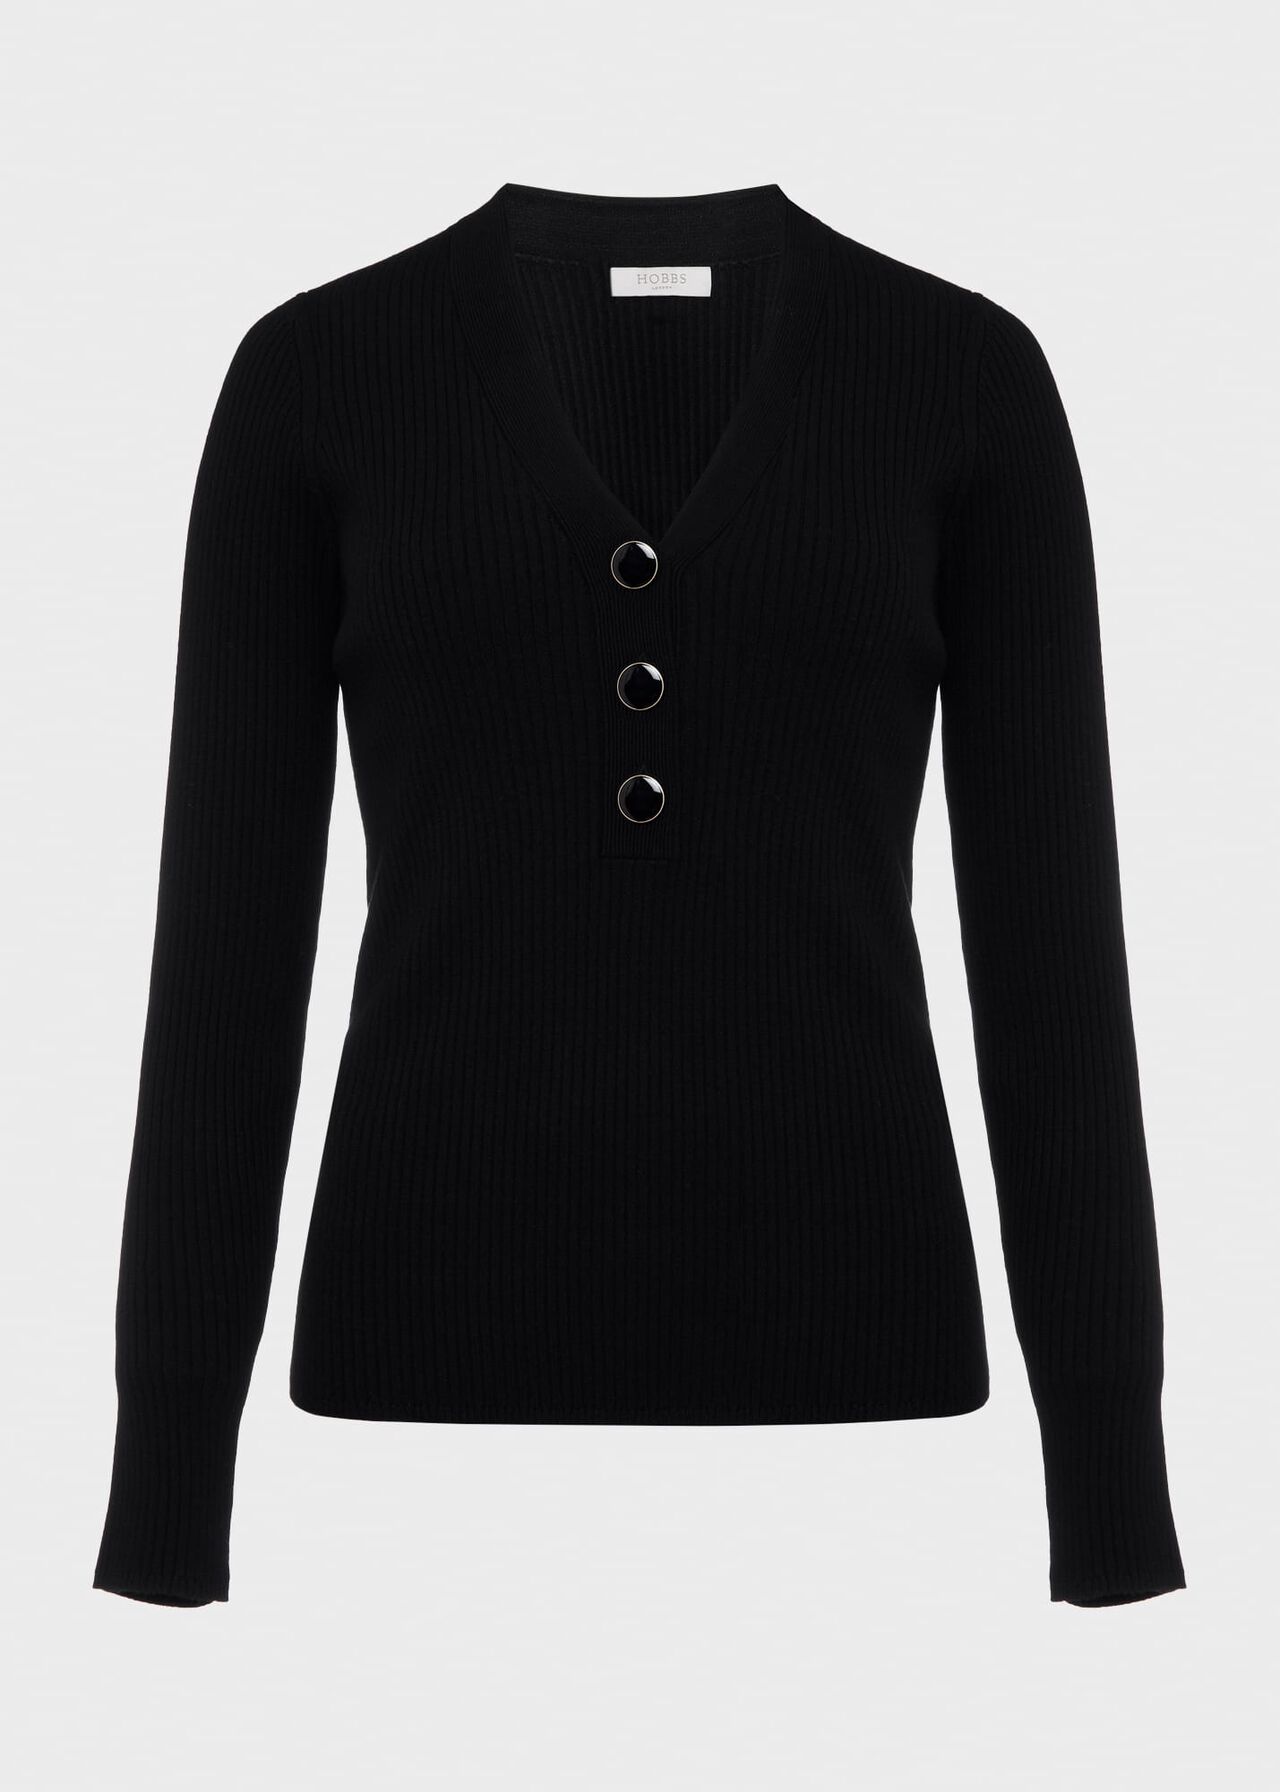 Kaya Ribbed Sweater, Black, hi-res